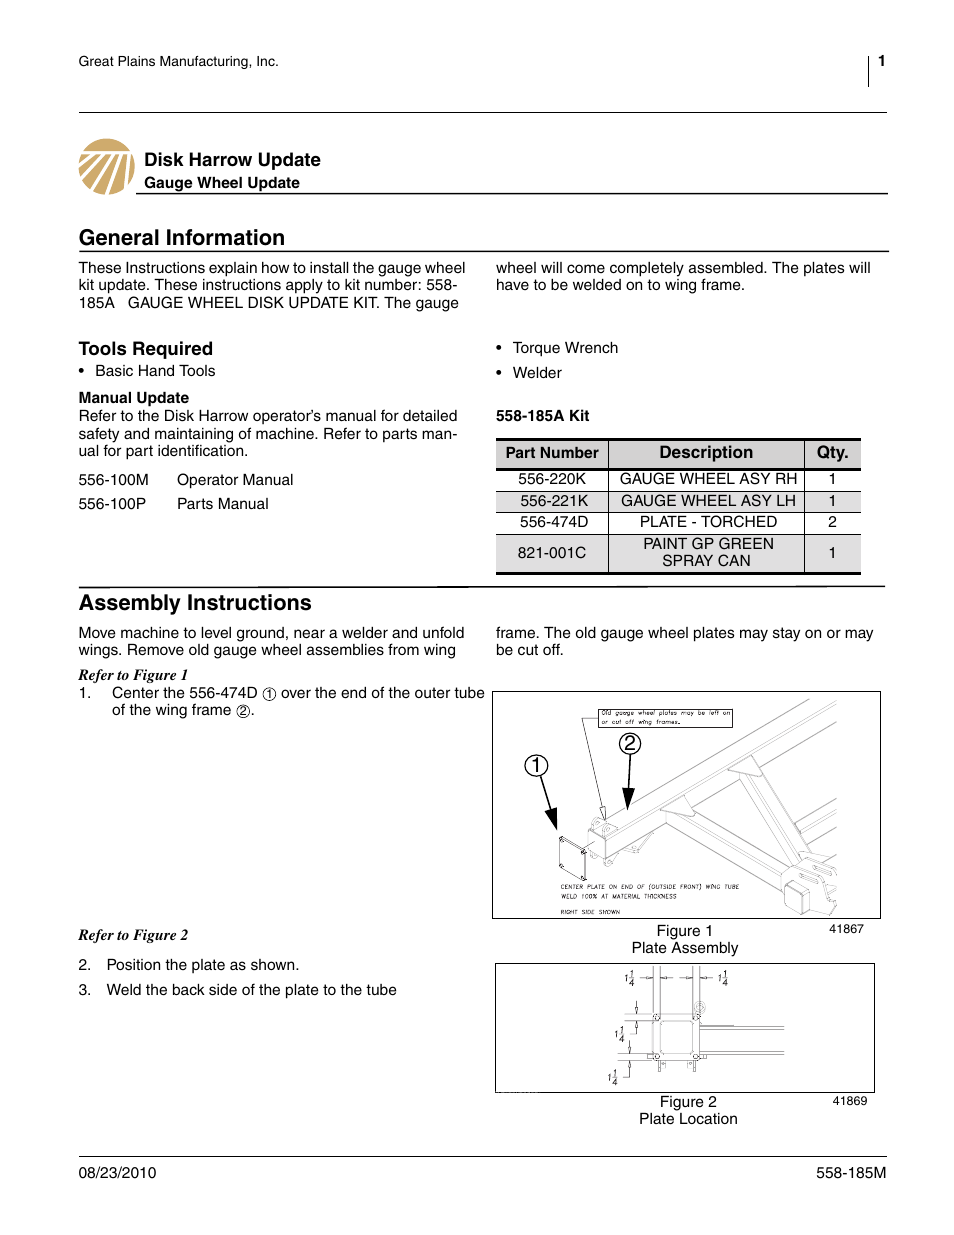 Great Plains Disk Harrow Update Gauge Wheel User Manual | 2 pages